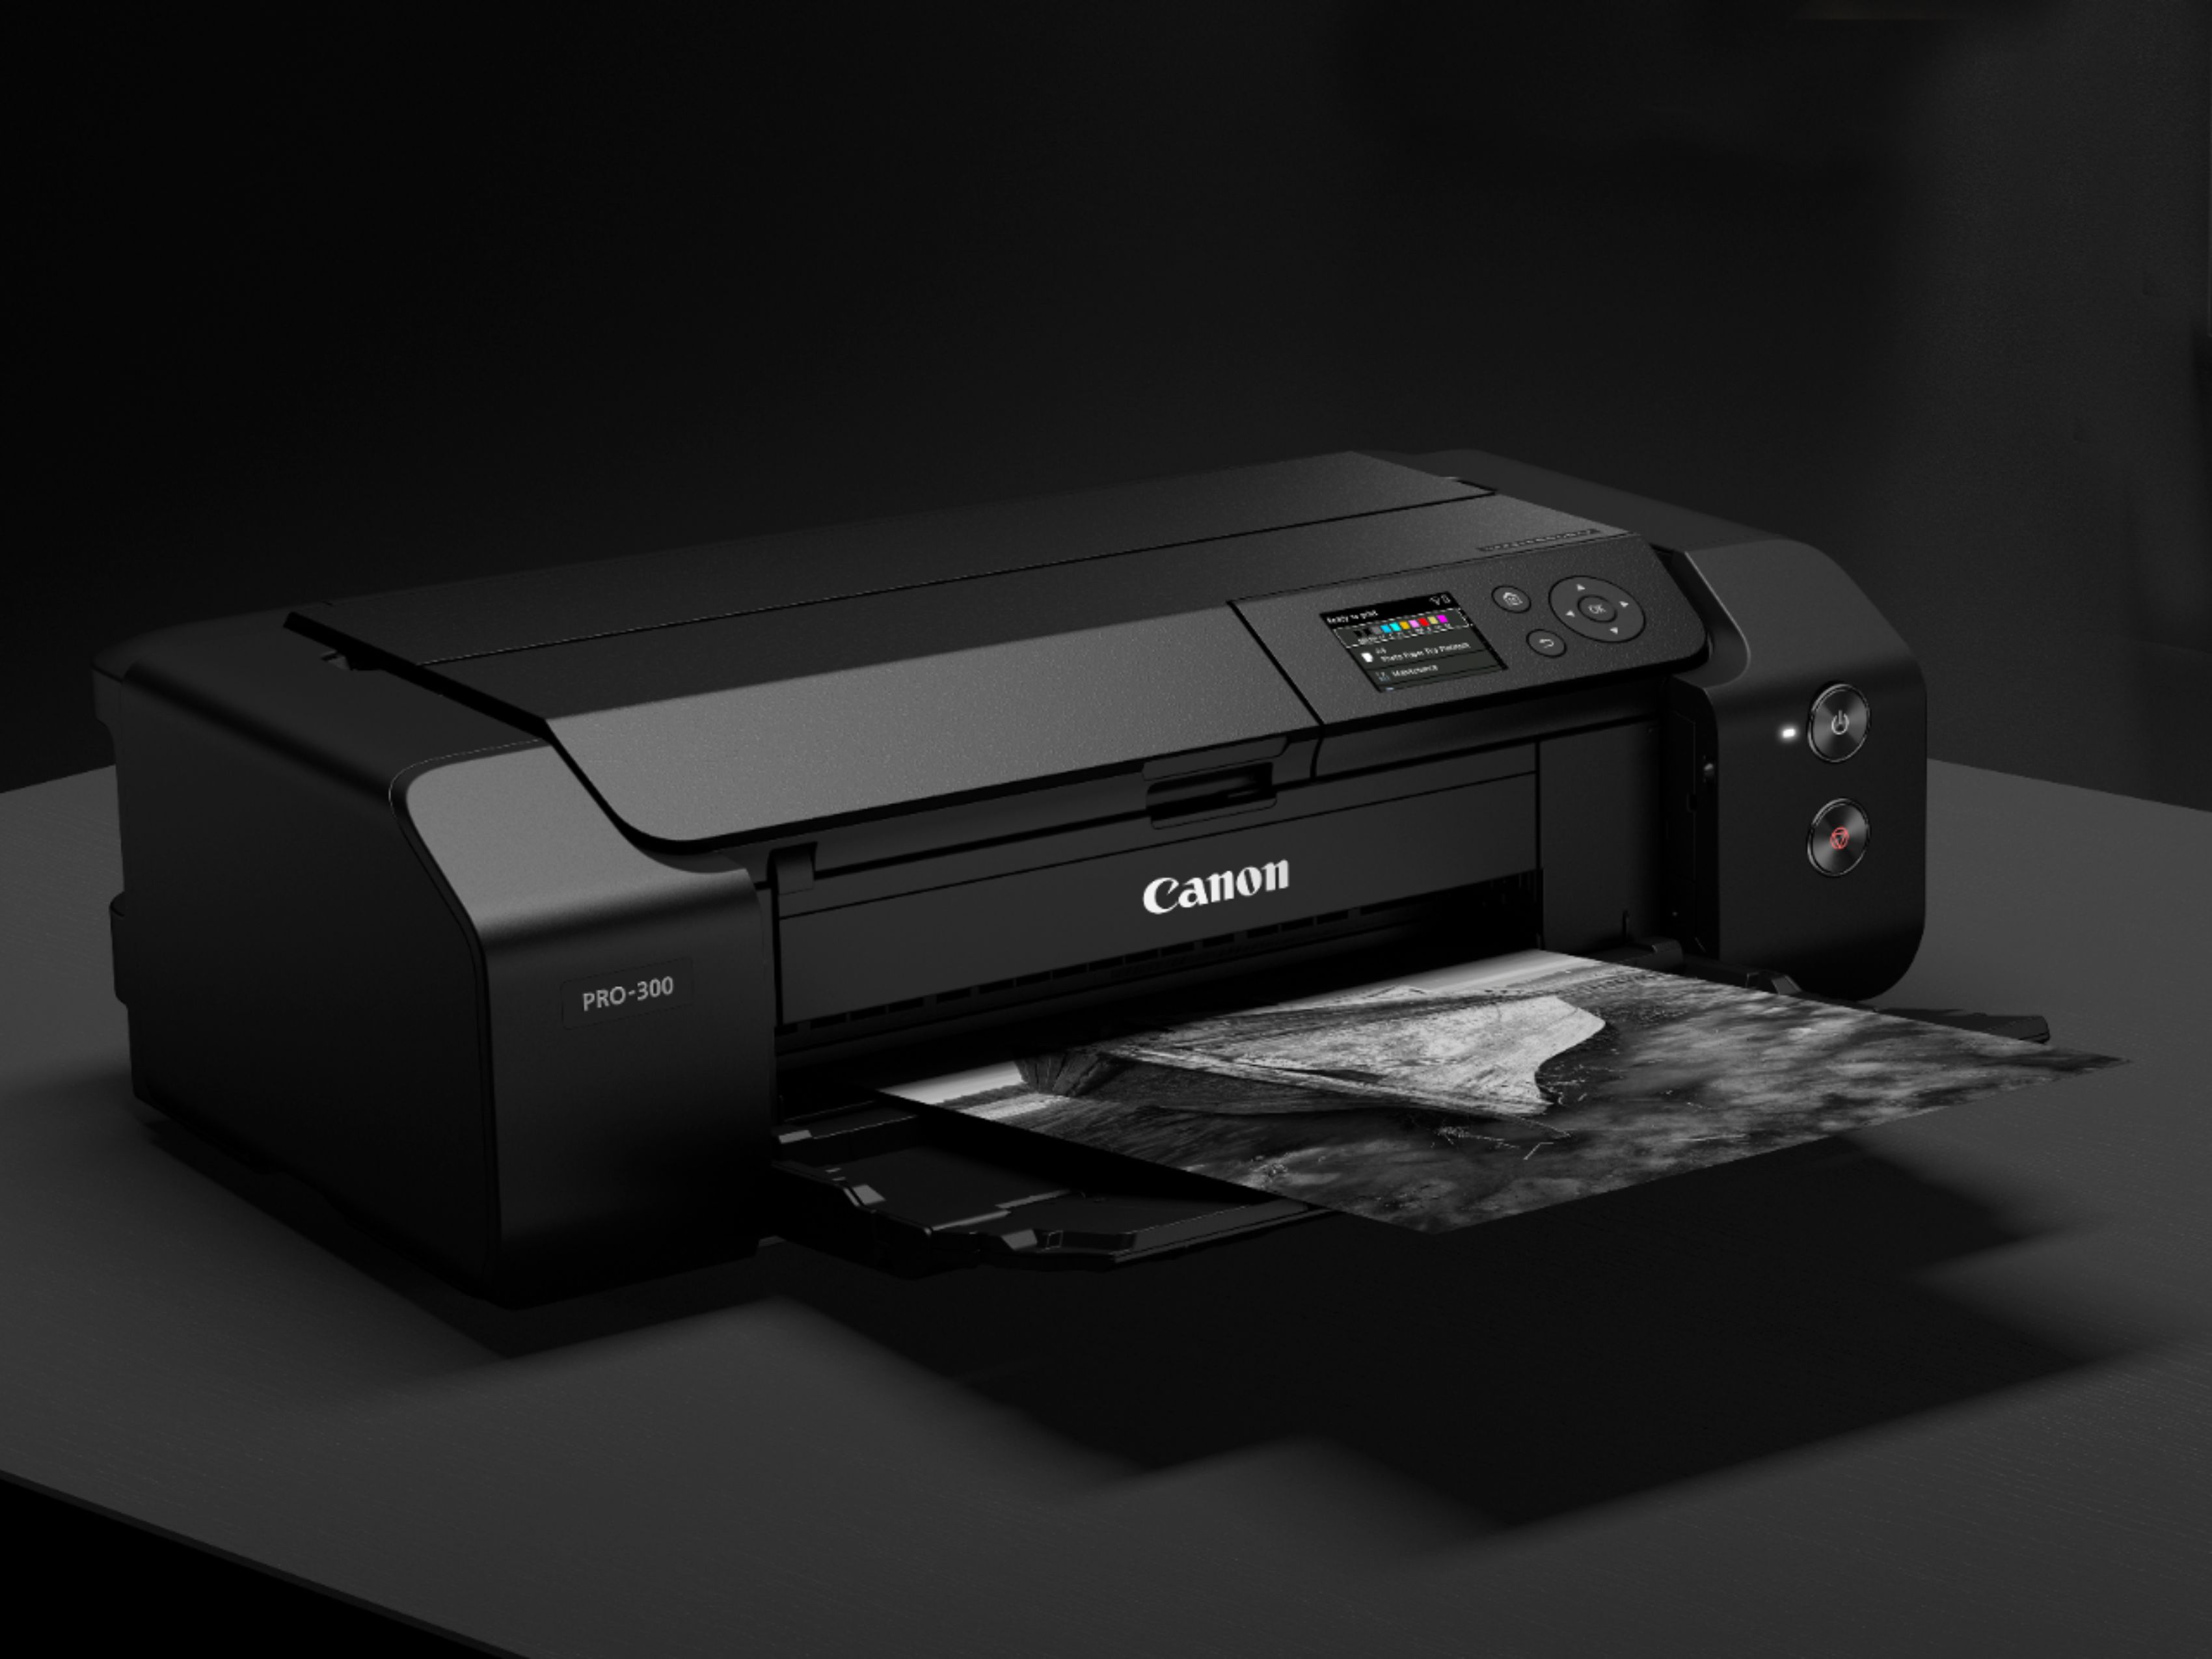 Canon ImagePROGRAF PRO 300 Wireless Inkjet Printer Black ImagePROGRAF 